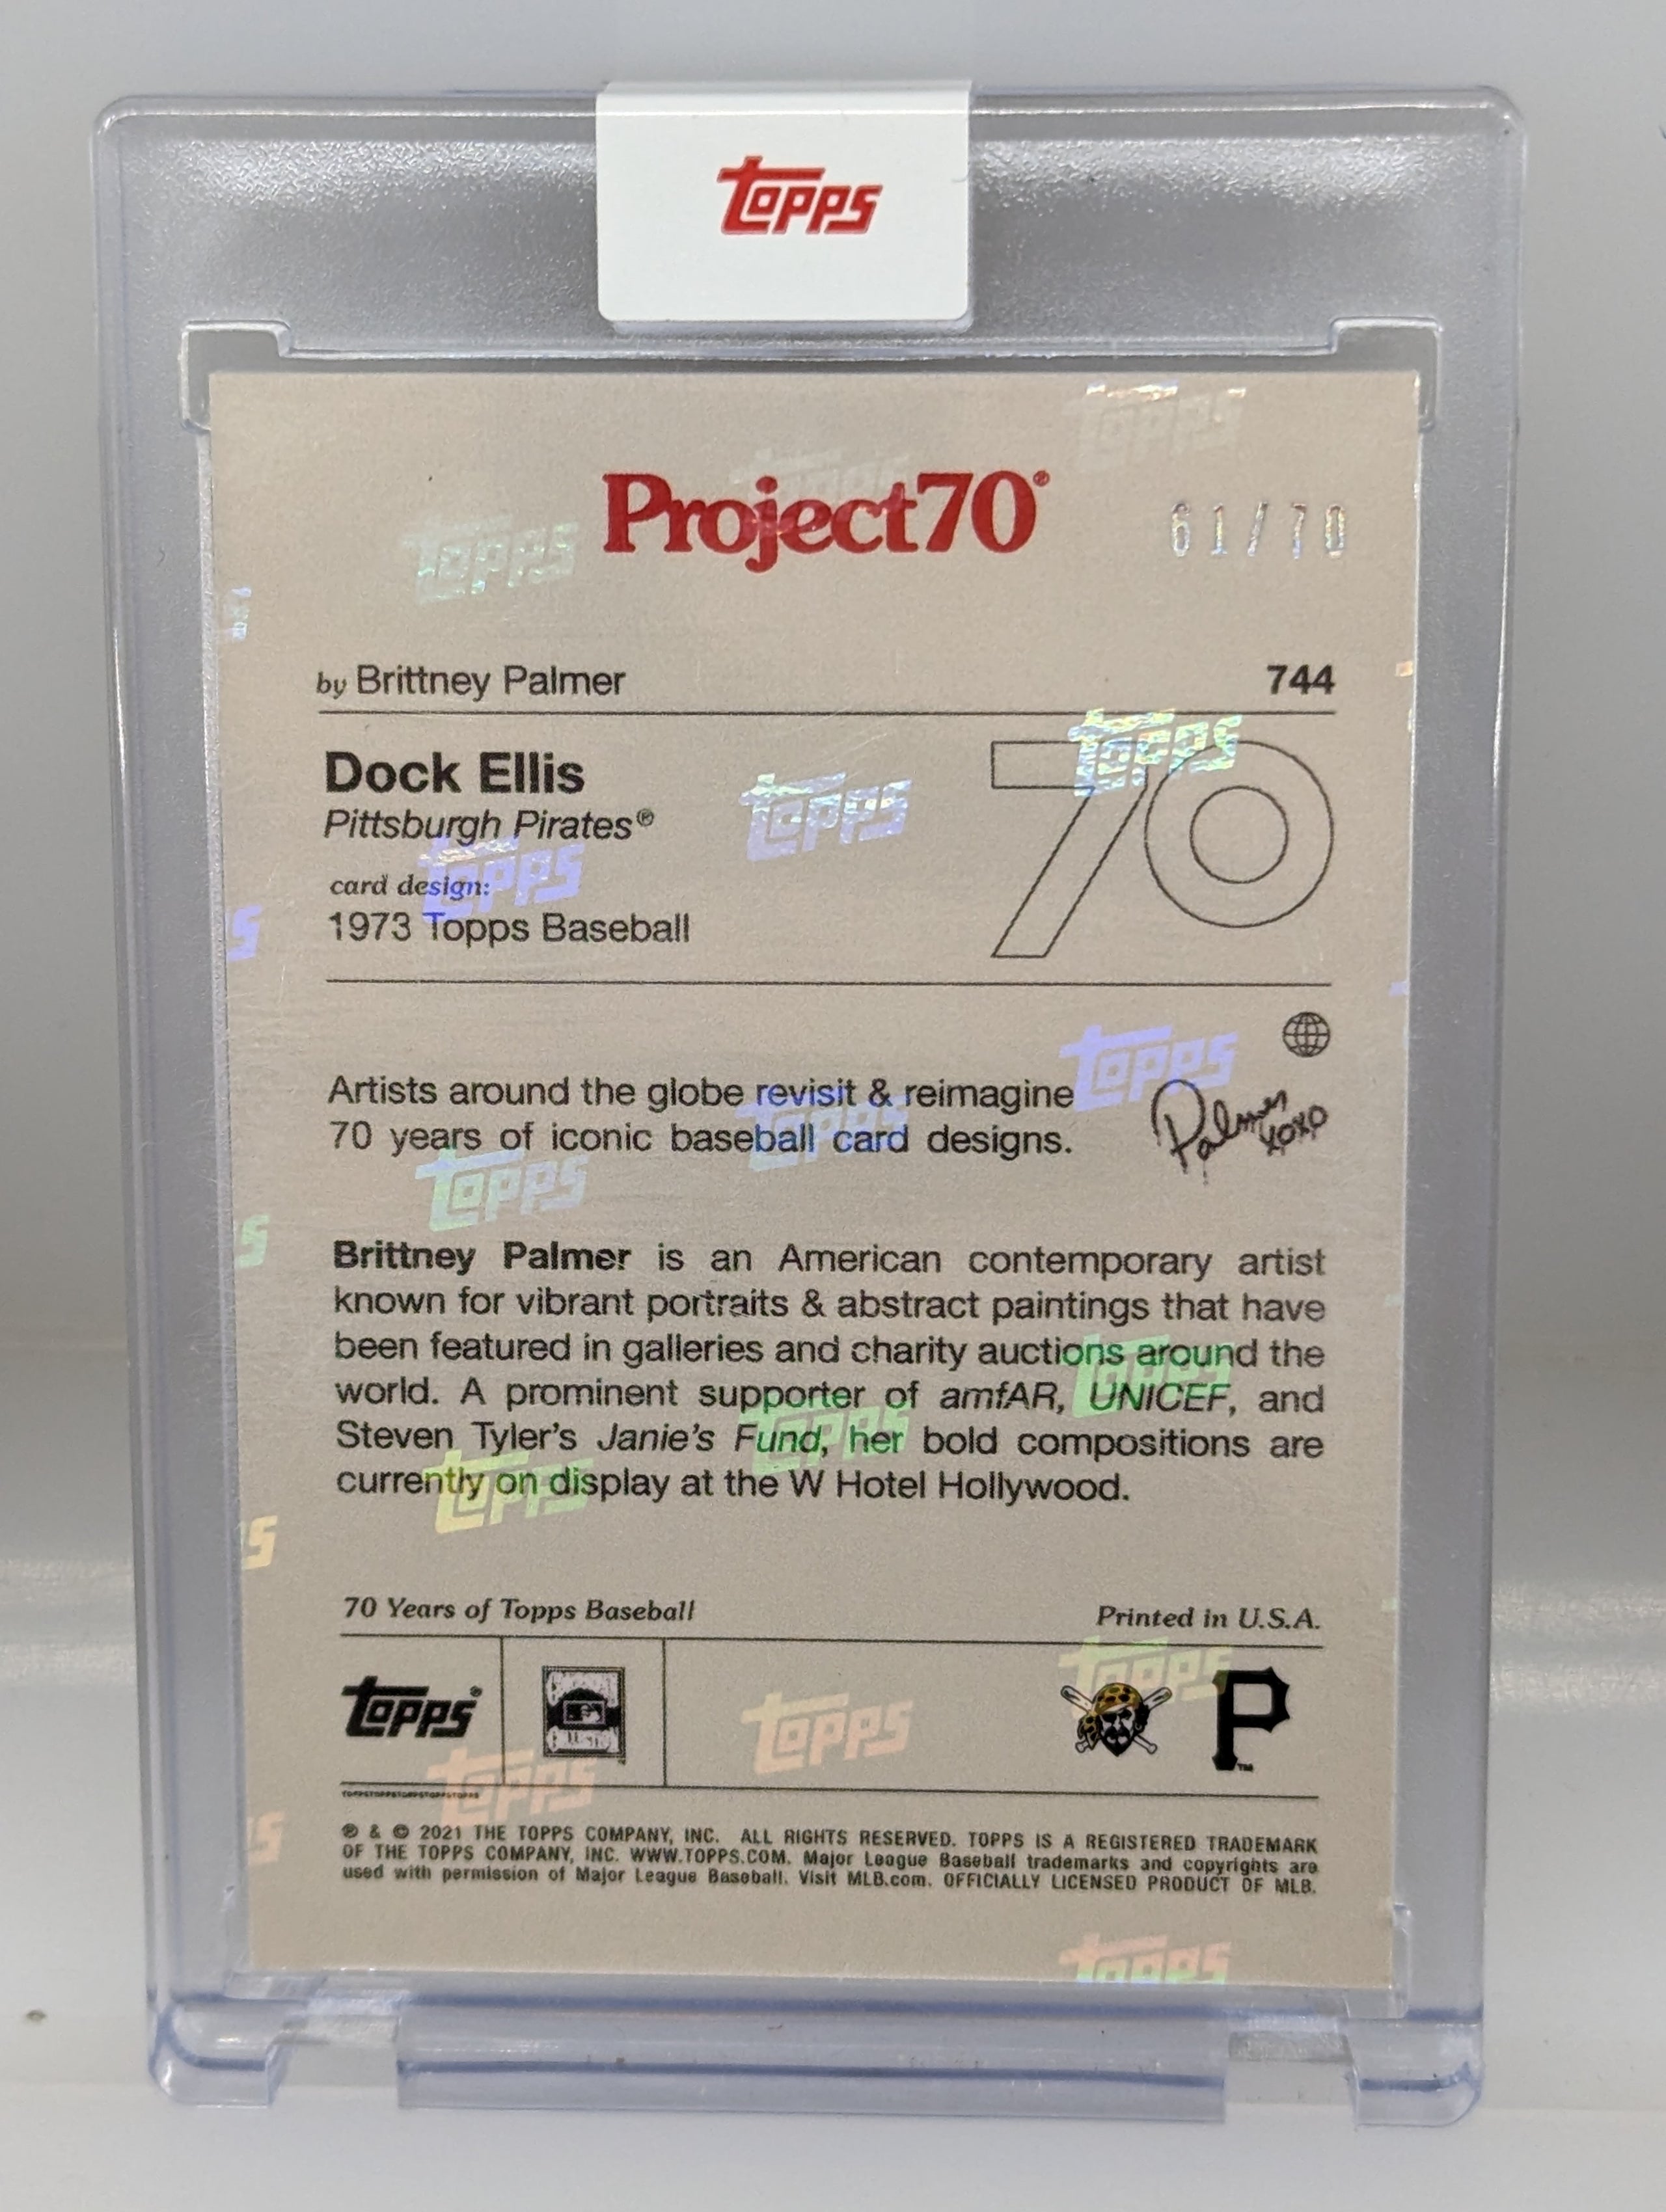 Topps Project70® Card 744 - Dock Ellis by Brittney Palmer - PR: 879